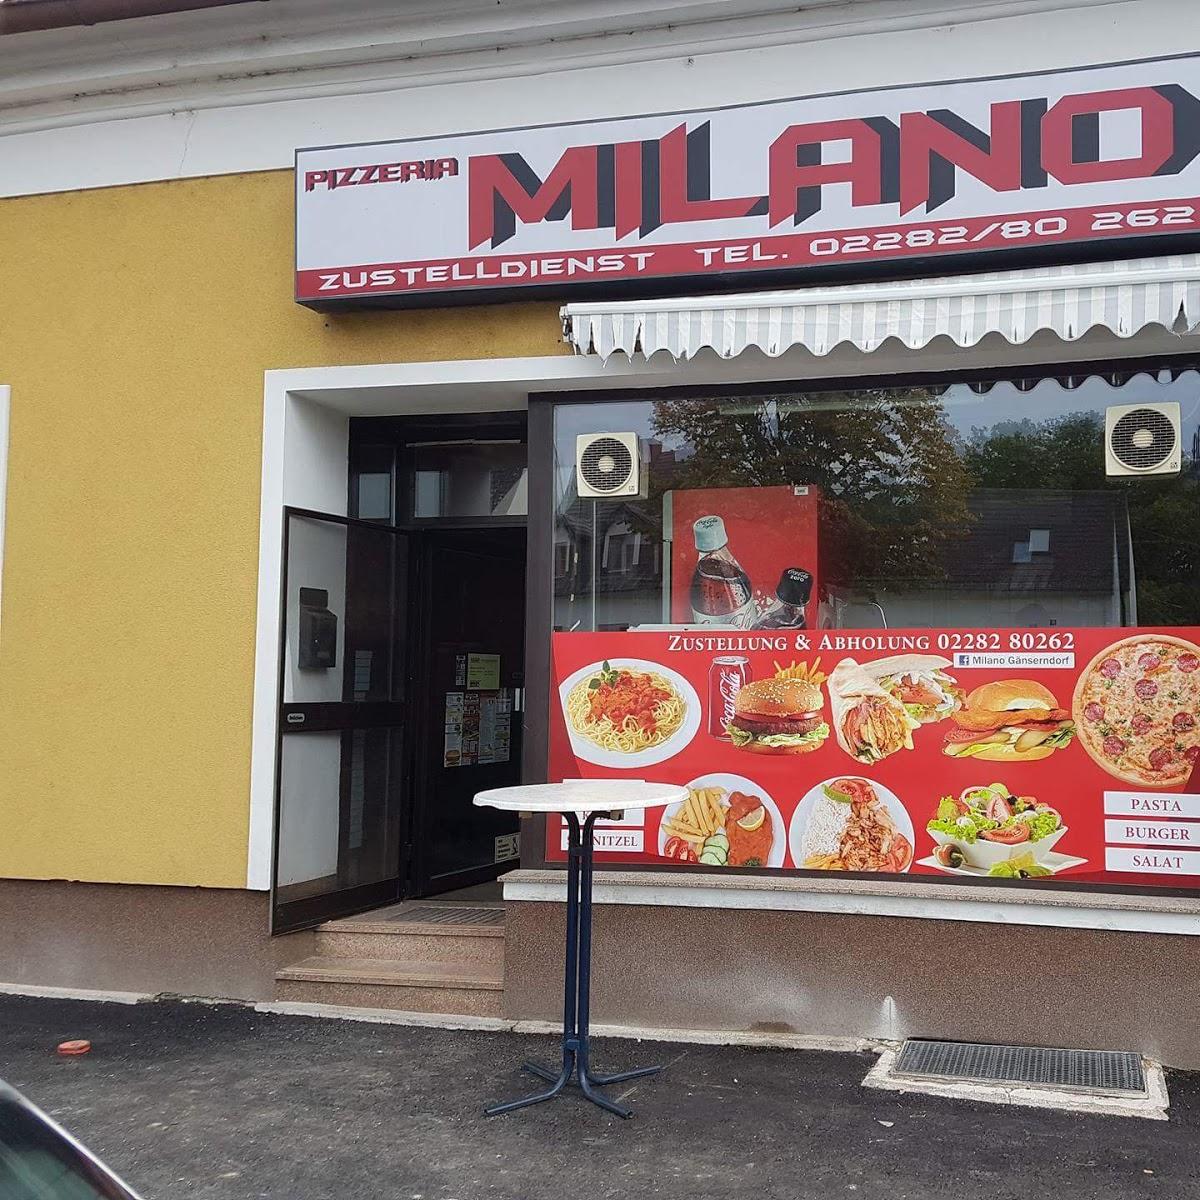 Restaurant "Pizzeria Milano" in Gänserndorf